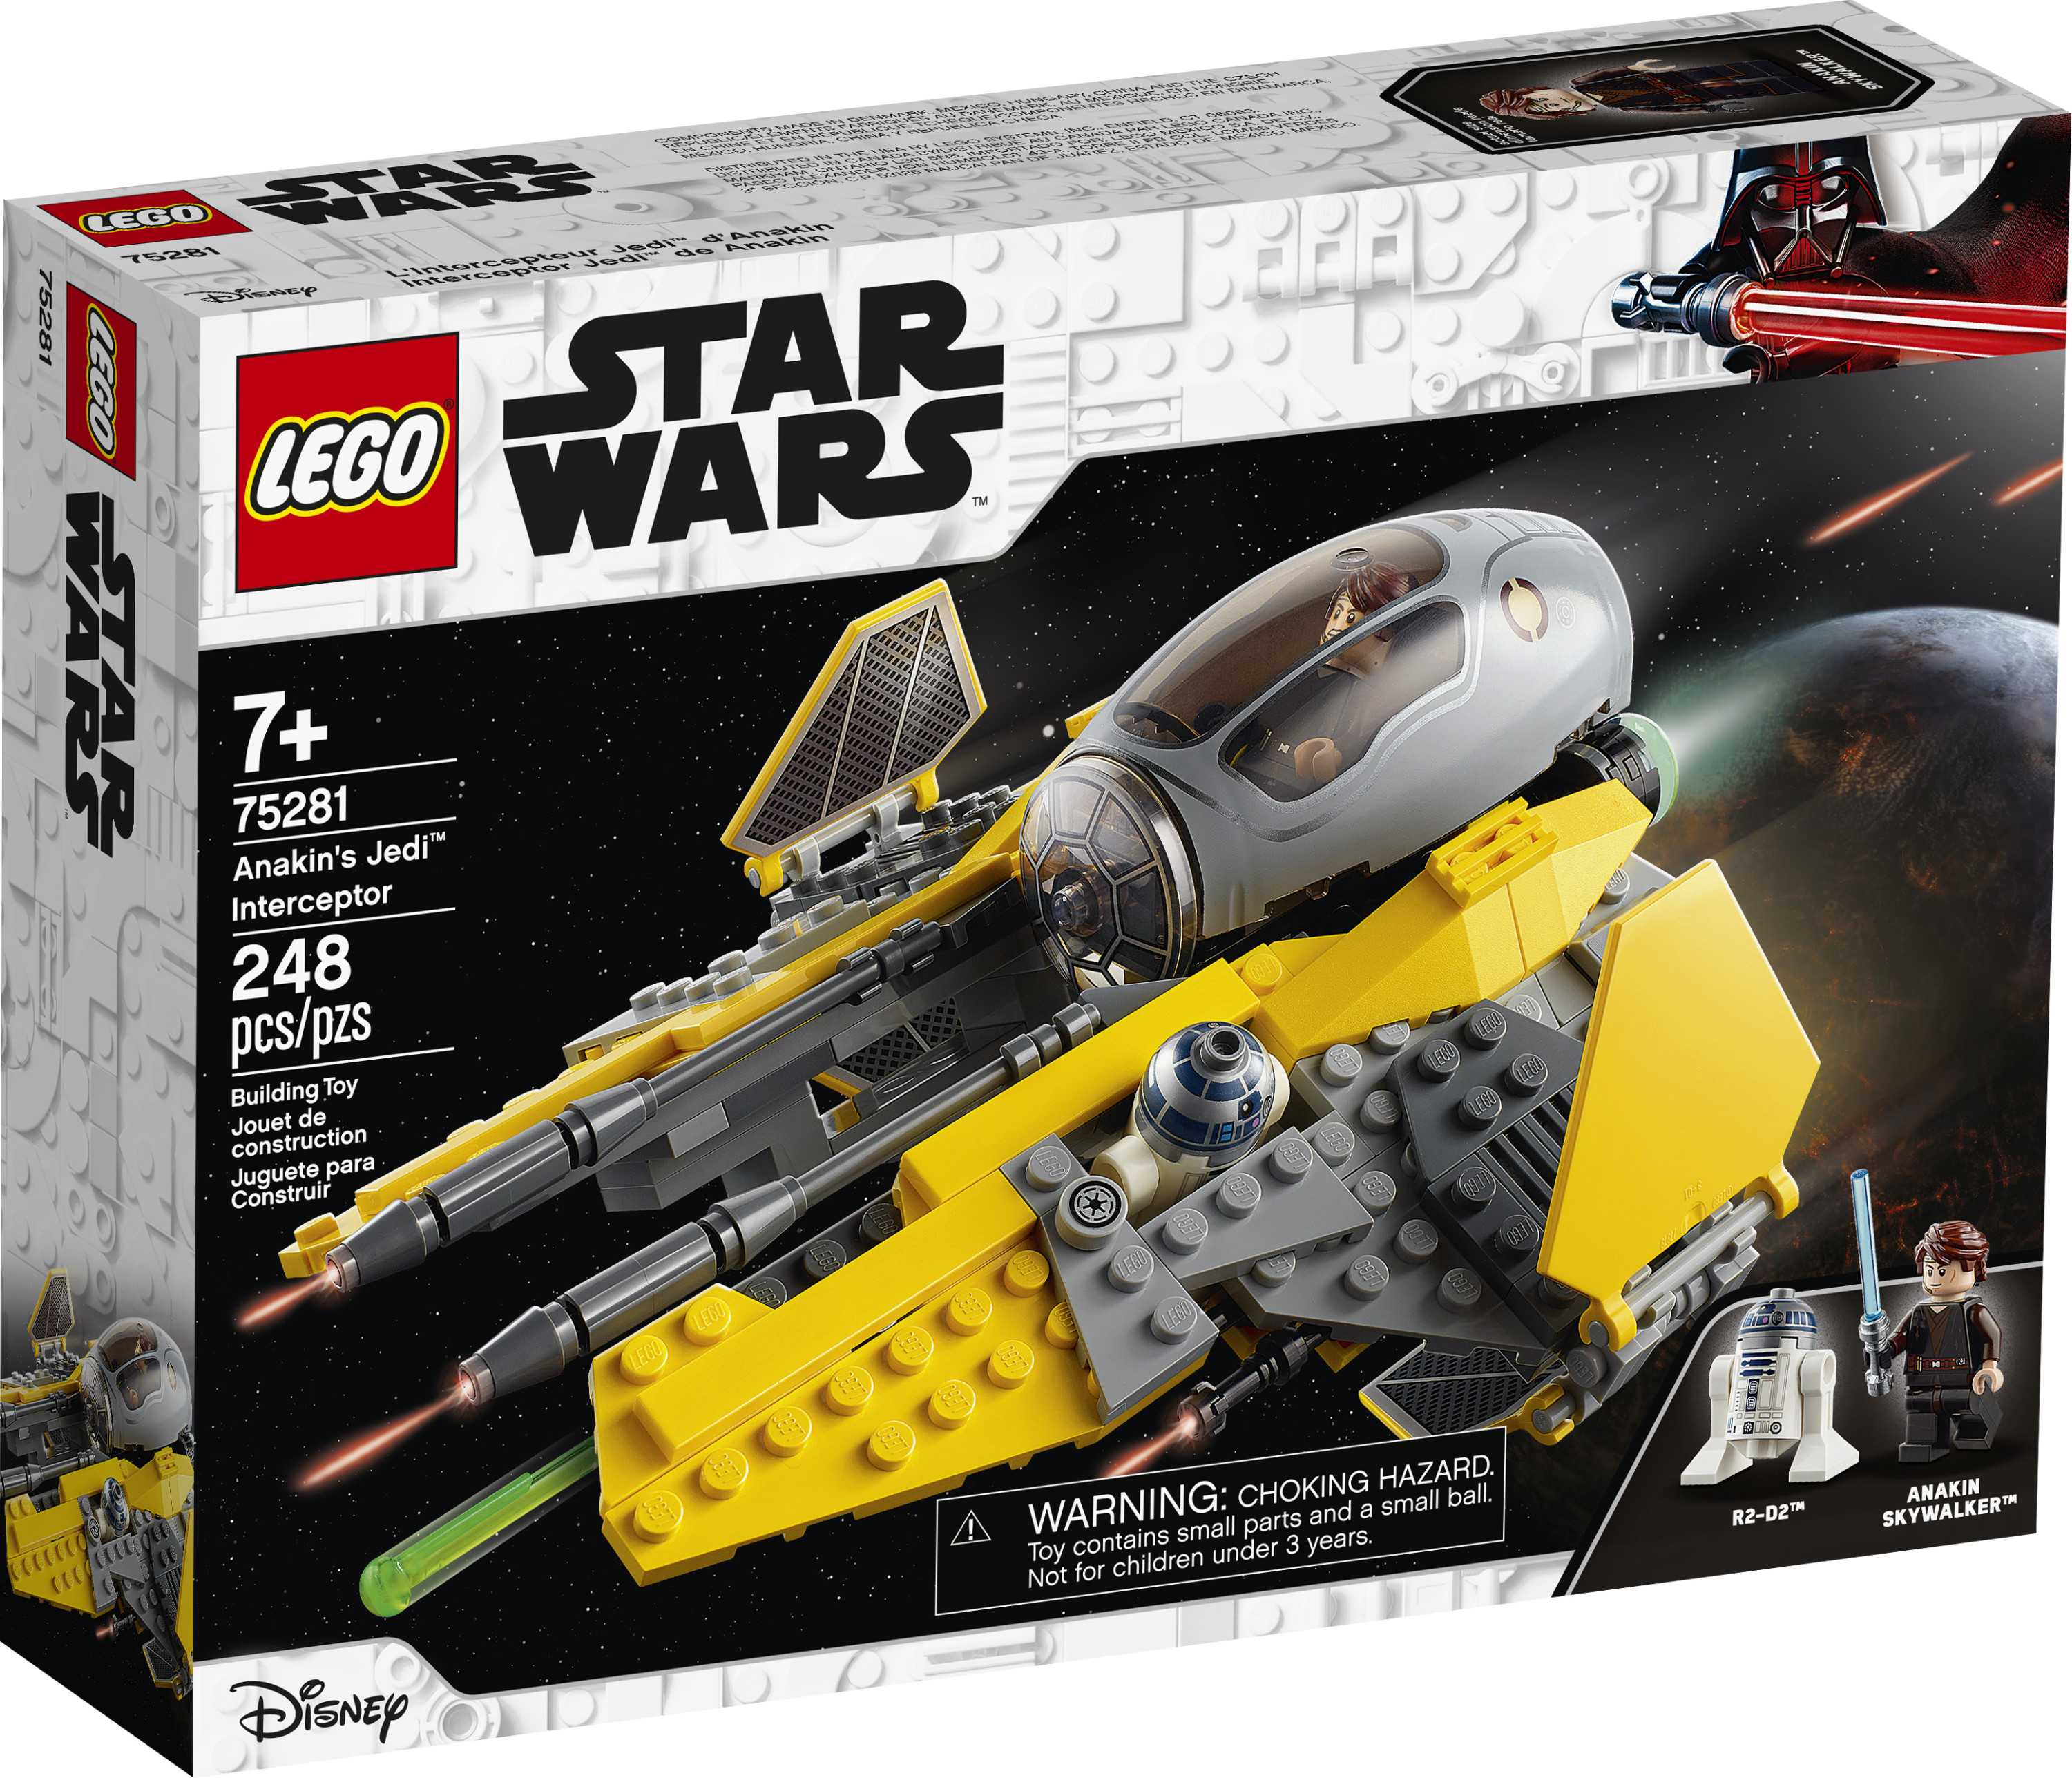 LEGO Star Wars: Revenge of the Sith Anakin’s Jedi Interceptor 75281 Anakin Skywalker Building Toy (248 Pieces) - image 5 of 8